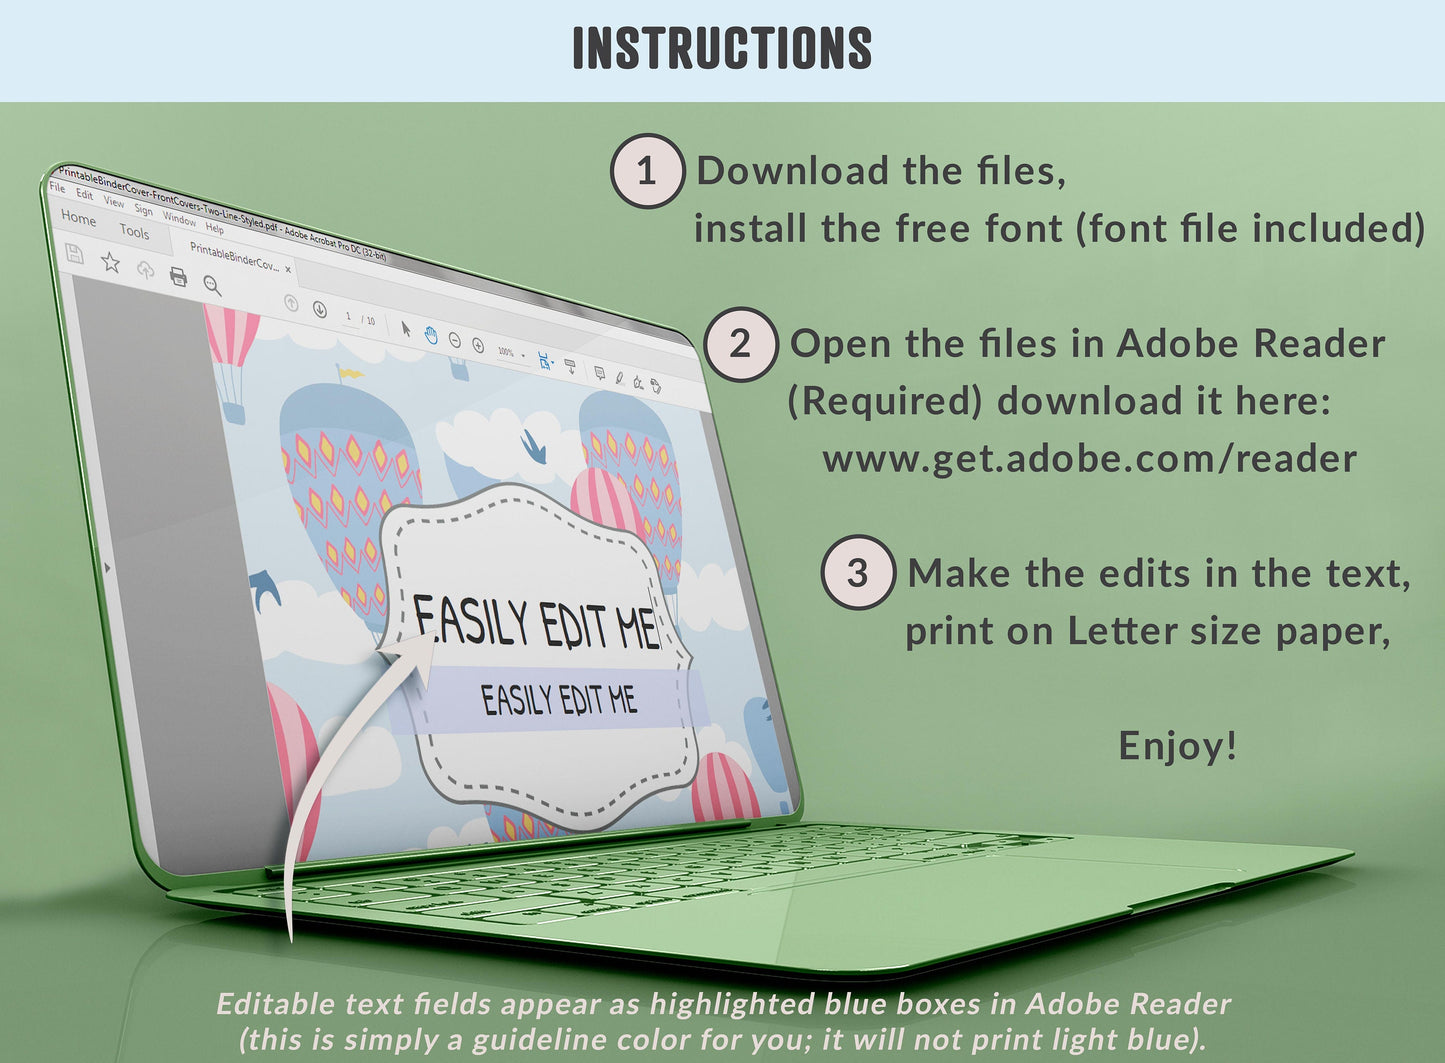 Printable Binder Cover, 10 Covers+Spines, Binder Cover Printable, Editable, Teacher/School Binder, Planner Cover, Binder Insert Template PDF